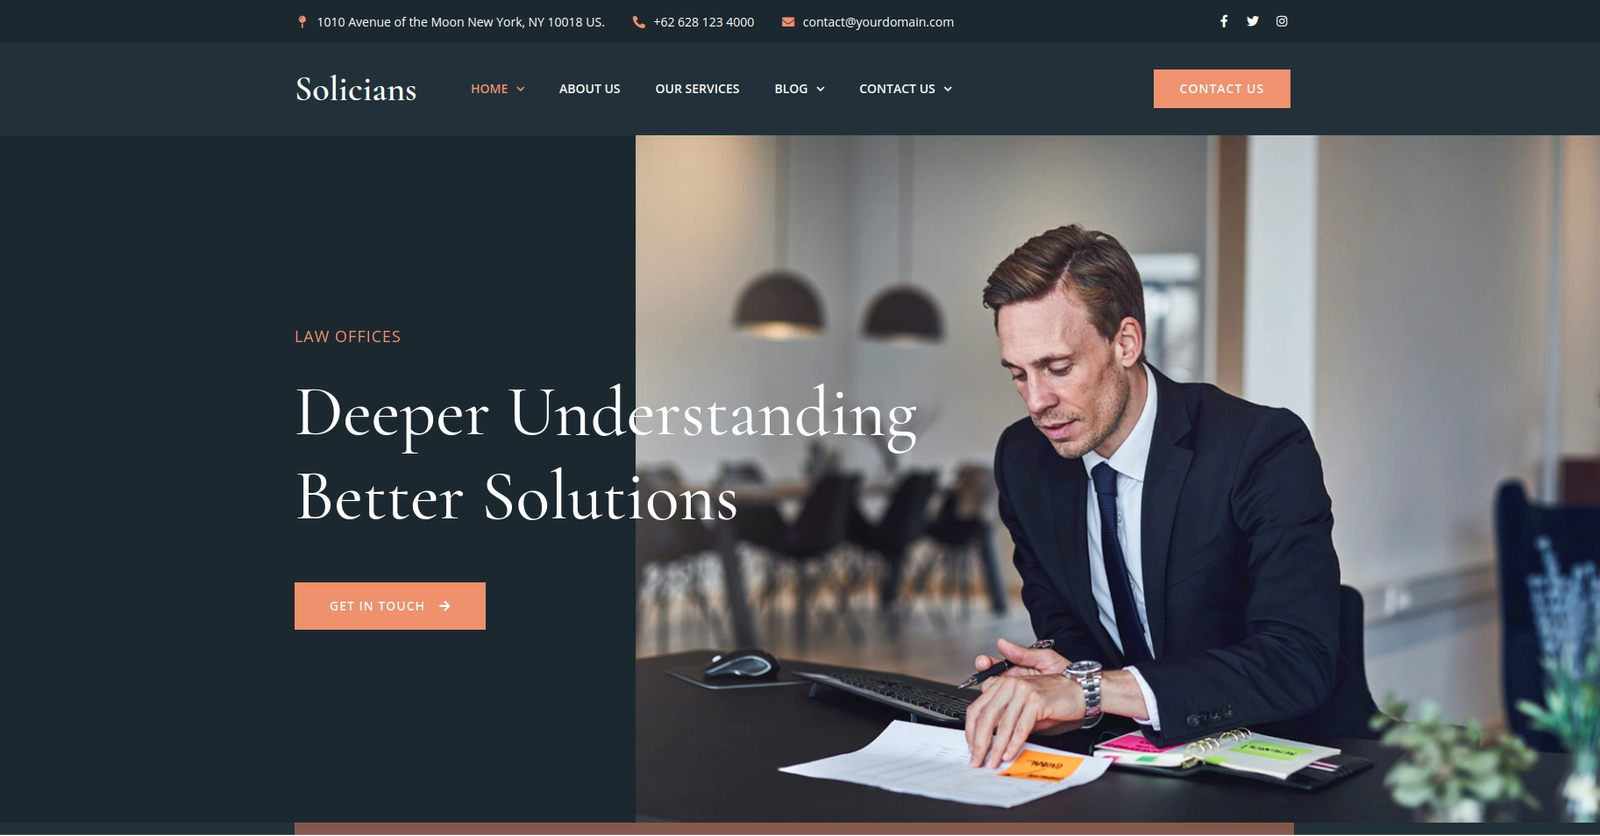 Website Design For Legal Services Industry